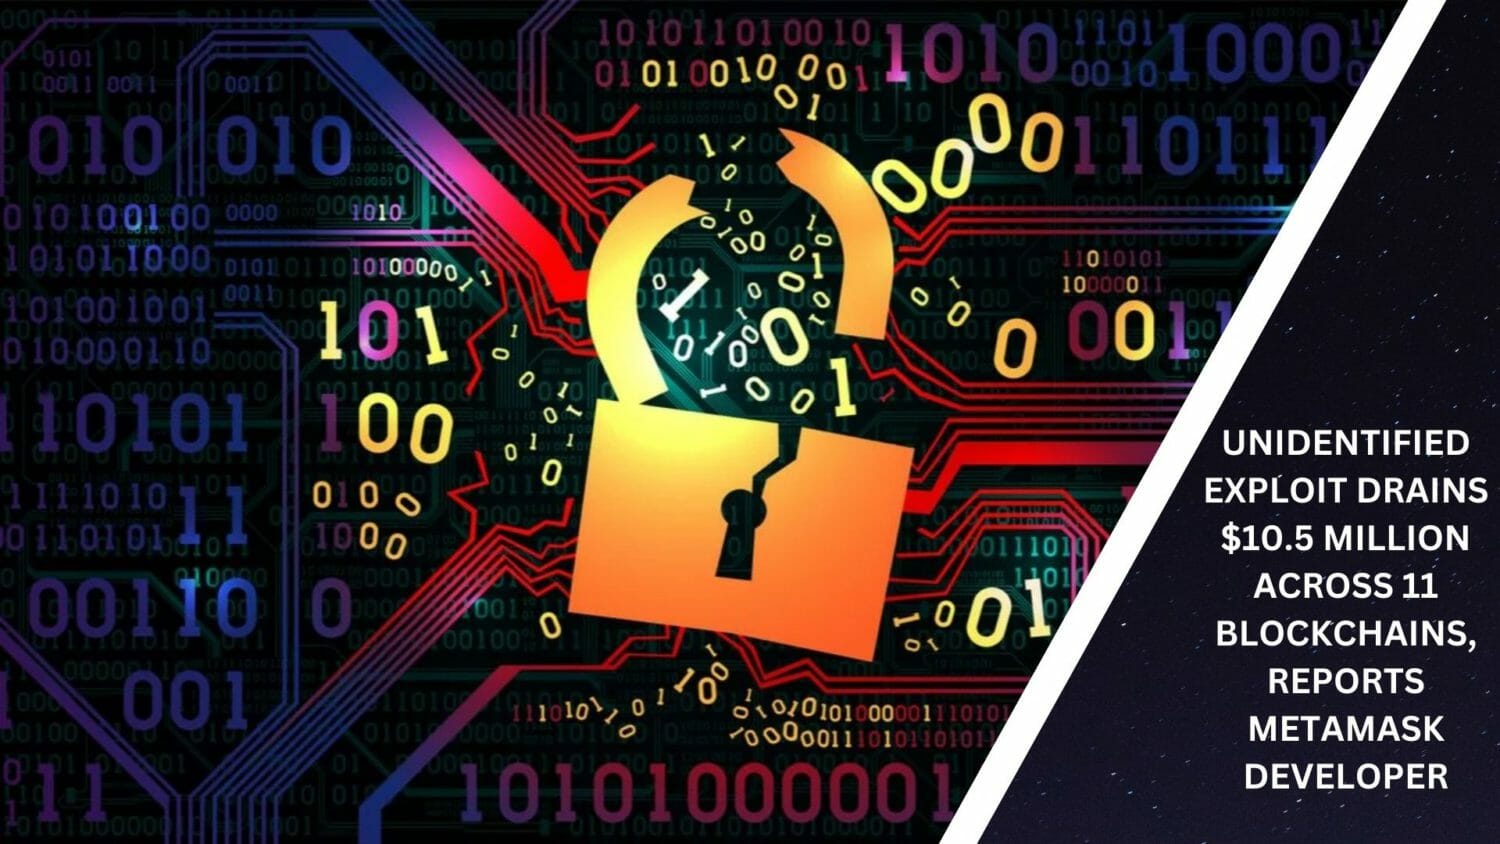 Unidentified Exploit Drains $10.5 Million In Nfts Across 11 Blockchains, Reports Metamask Developer